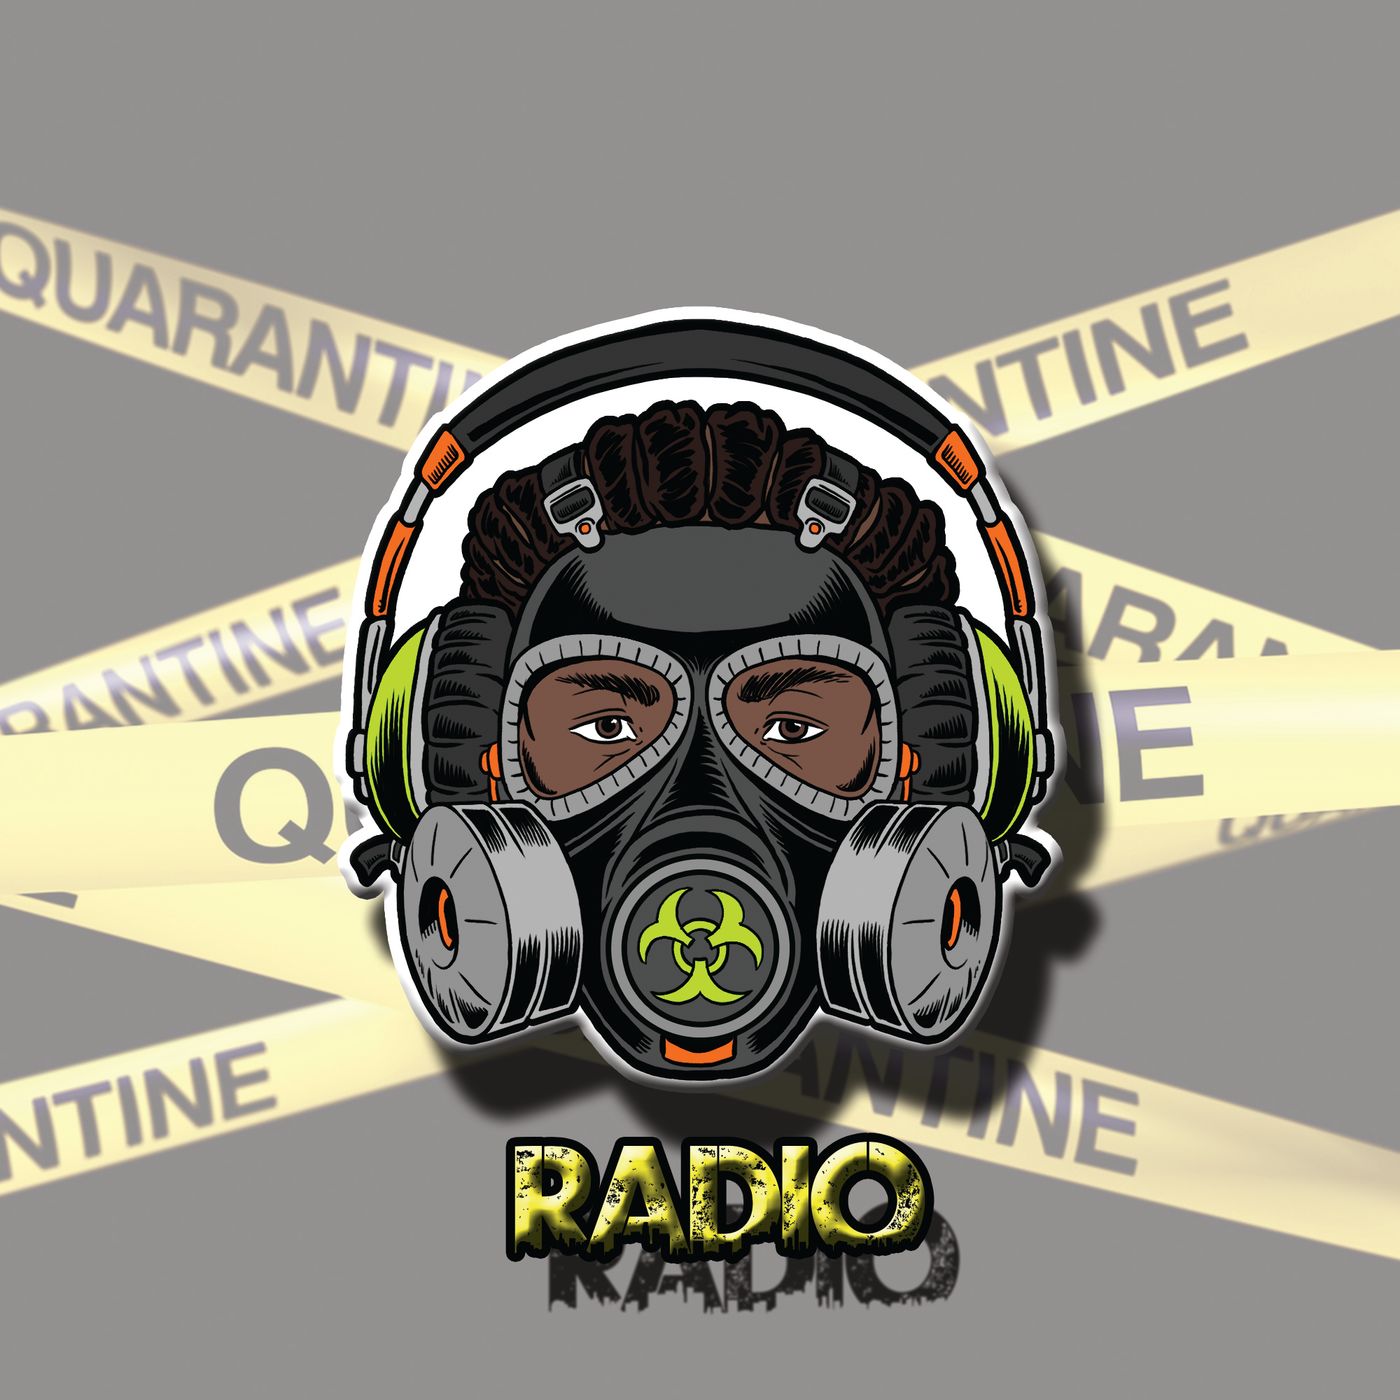 Quarantine Radio’s show